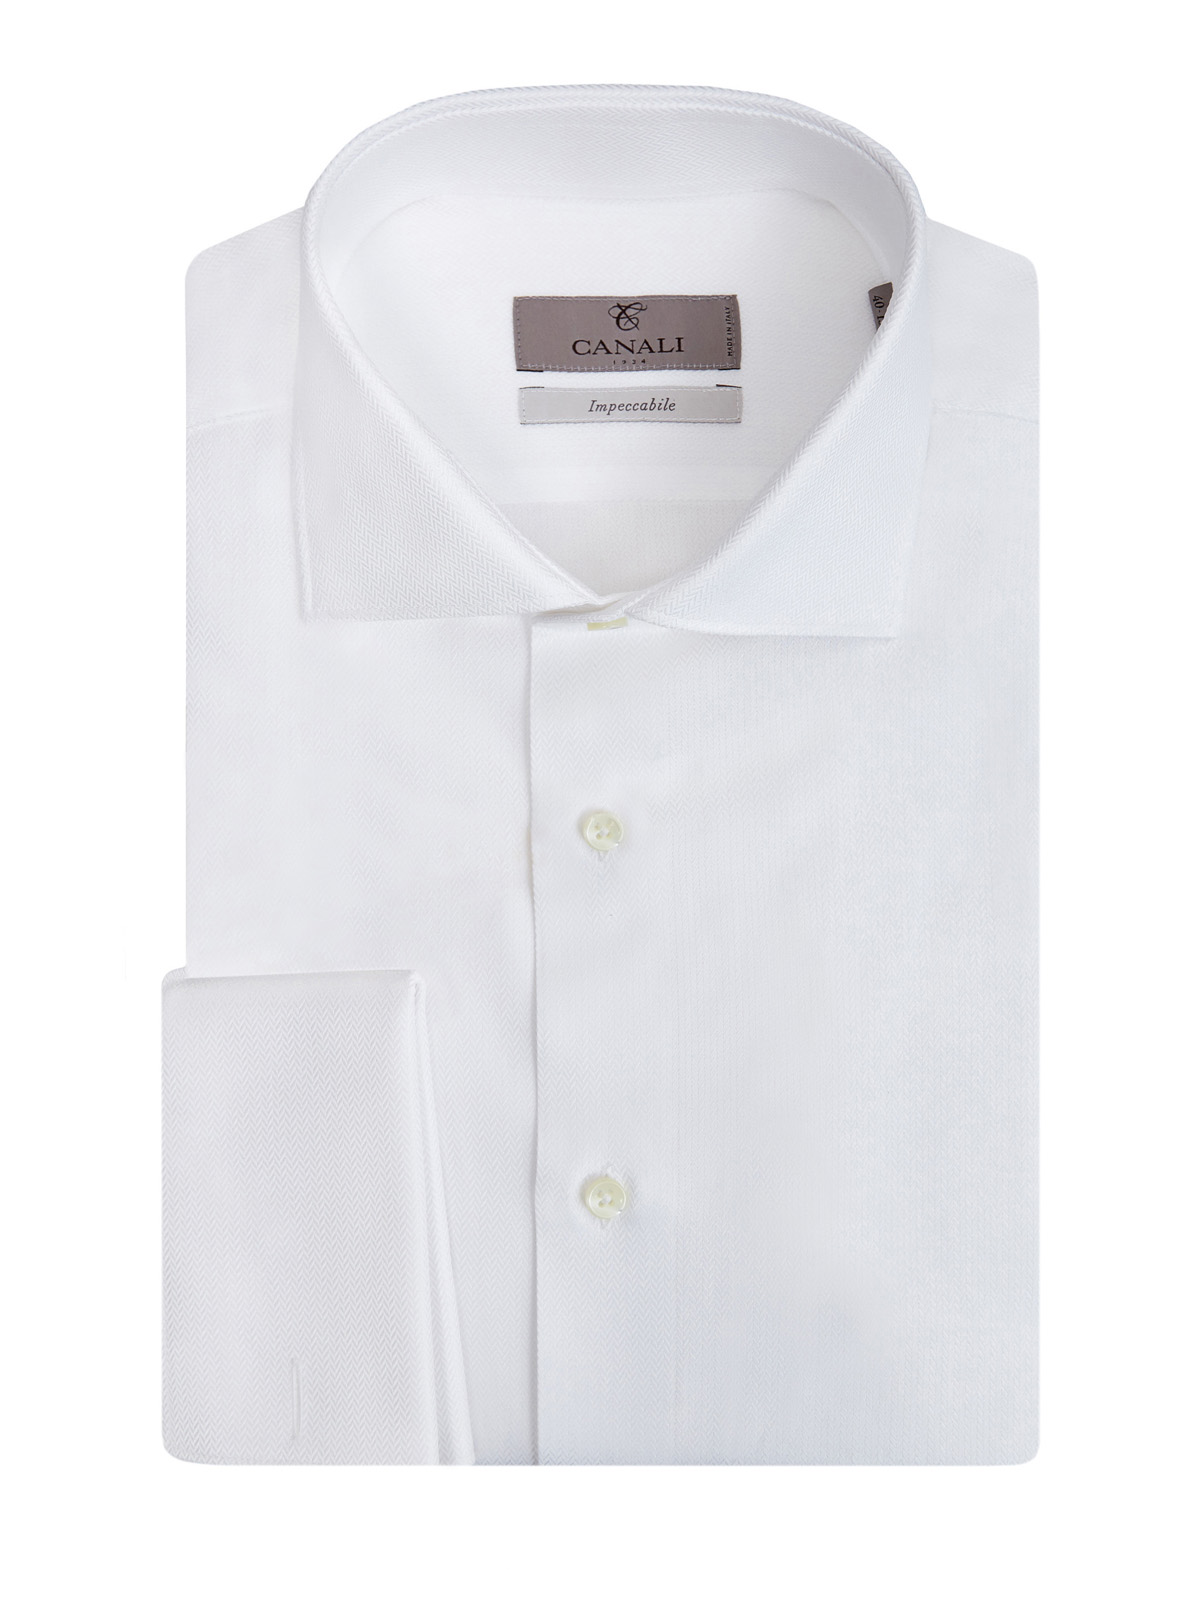 Рубашка из хлопка Impeccabile с паттерном в тон CANALI, цвет белый, размер 50;52;52;54;56;58 - фото 1